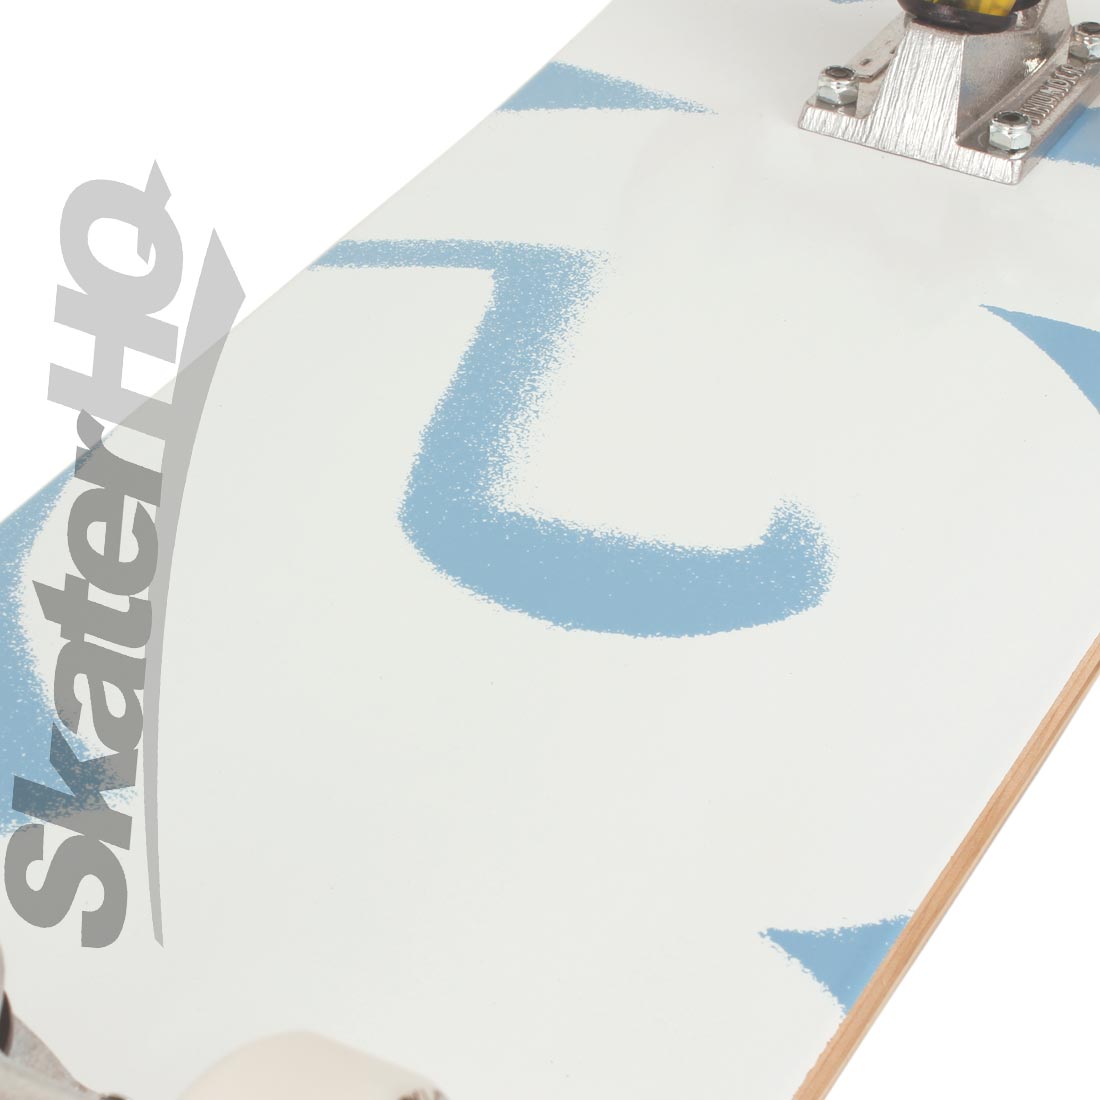 DGK Stencil 7.75 Complete - Blue Skateboard Completes Modern Street